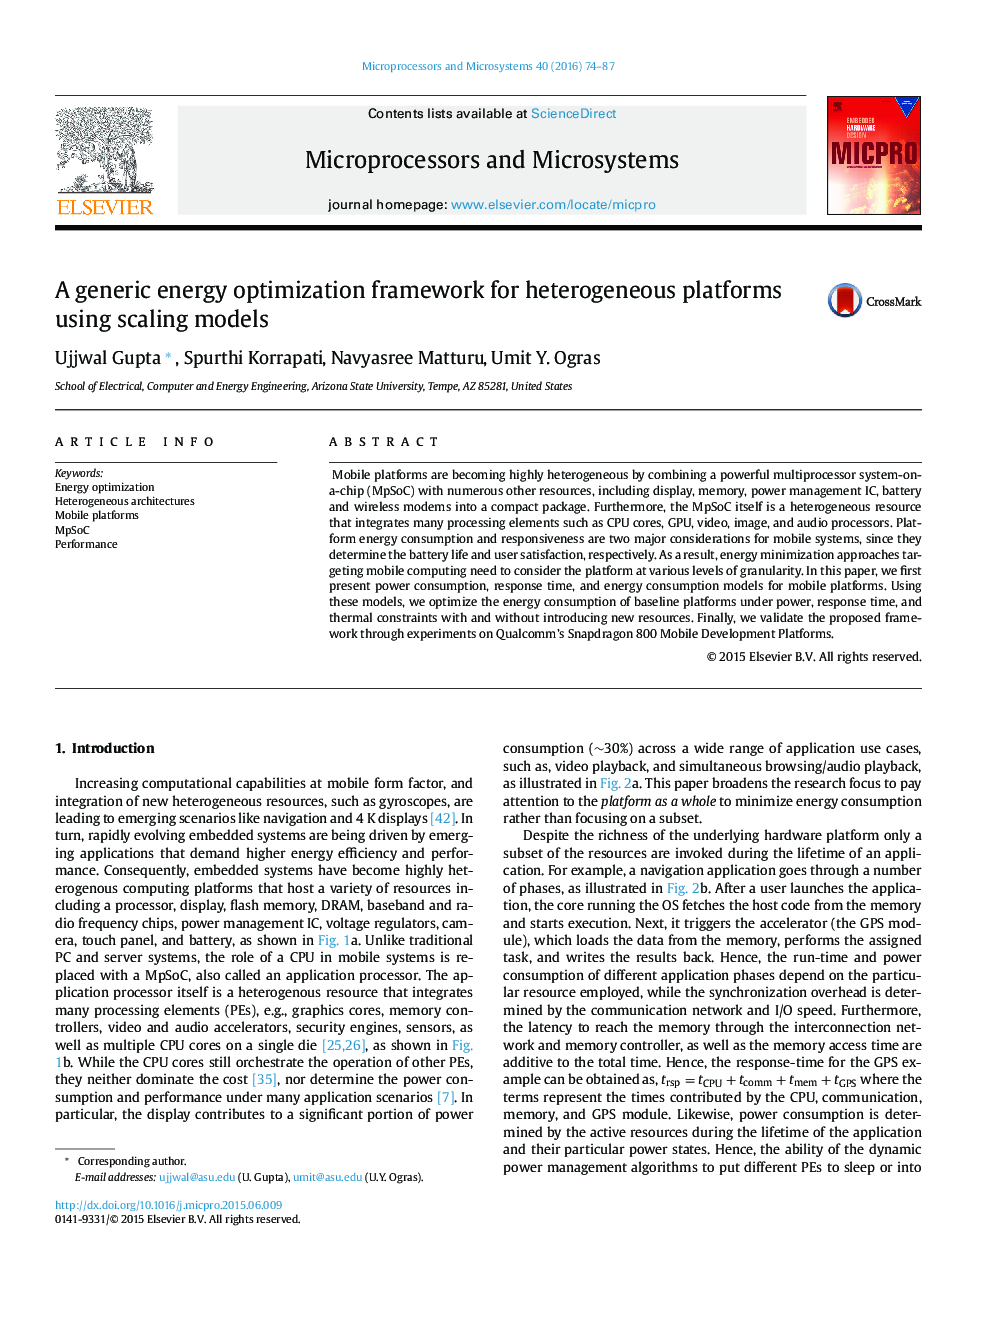 A generic energy optimization framework for heterogeneous platforms using scaling models